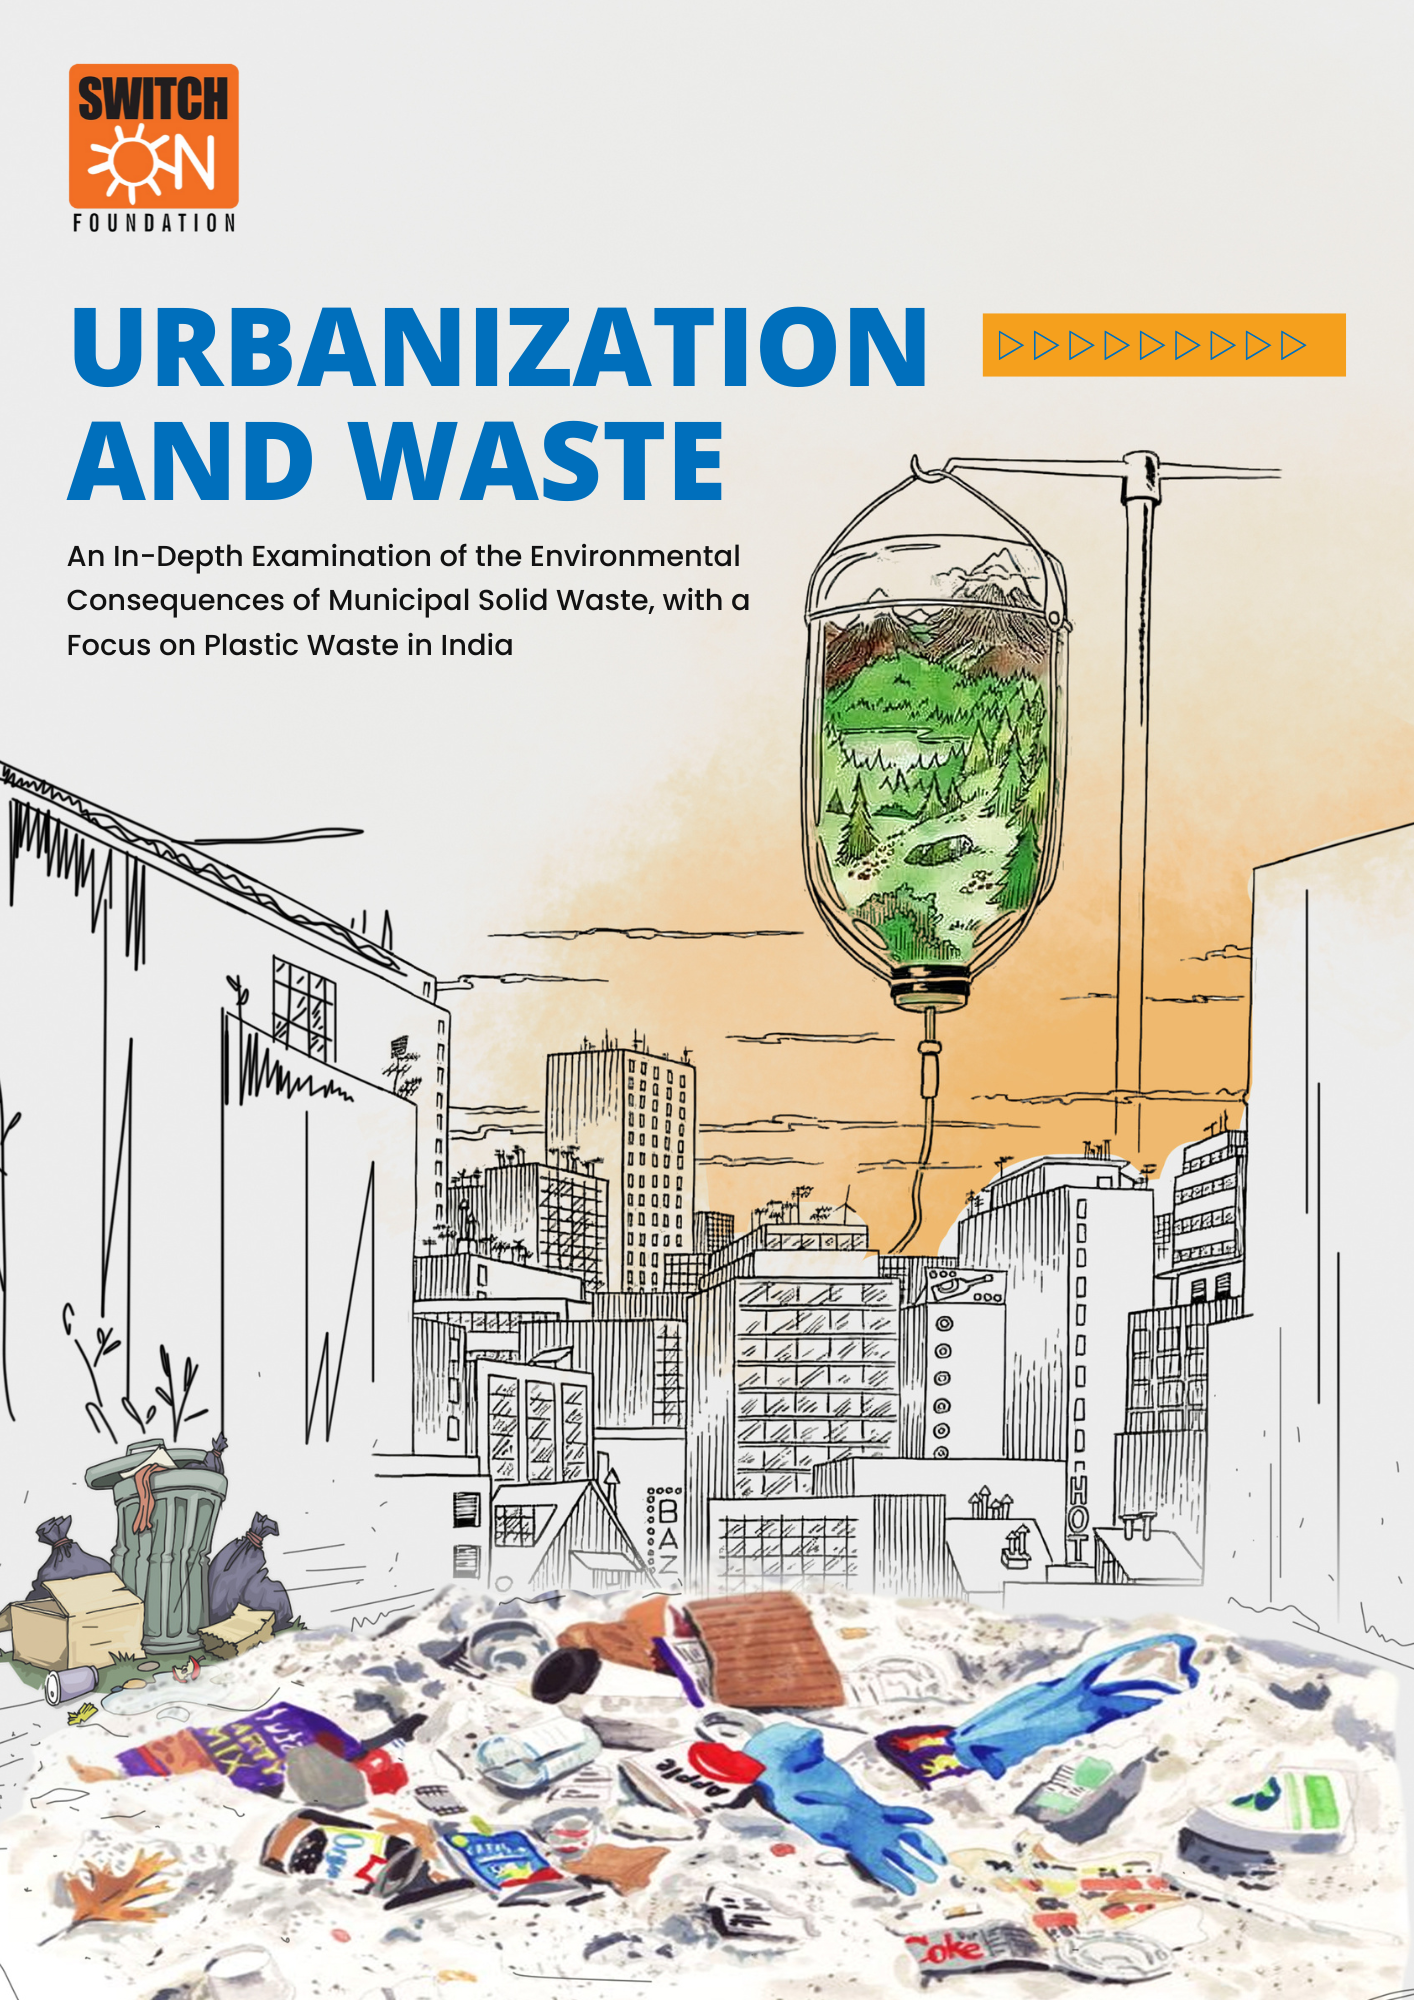 Urbanization & Waste: An In-Depth Examination of Municipal Solid Waste